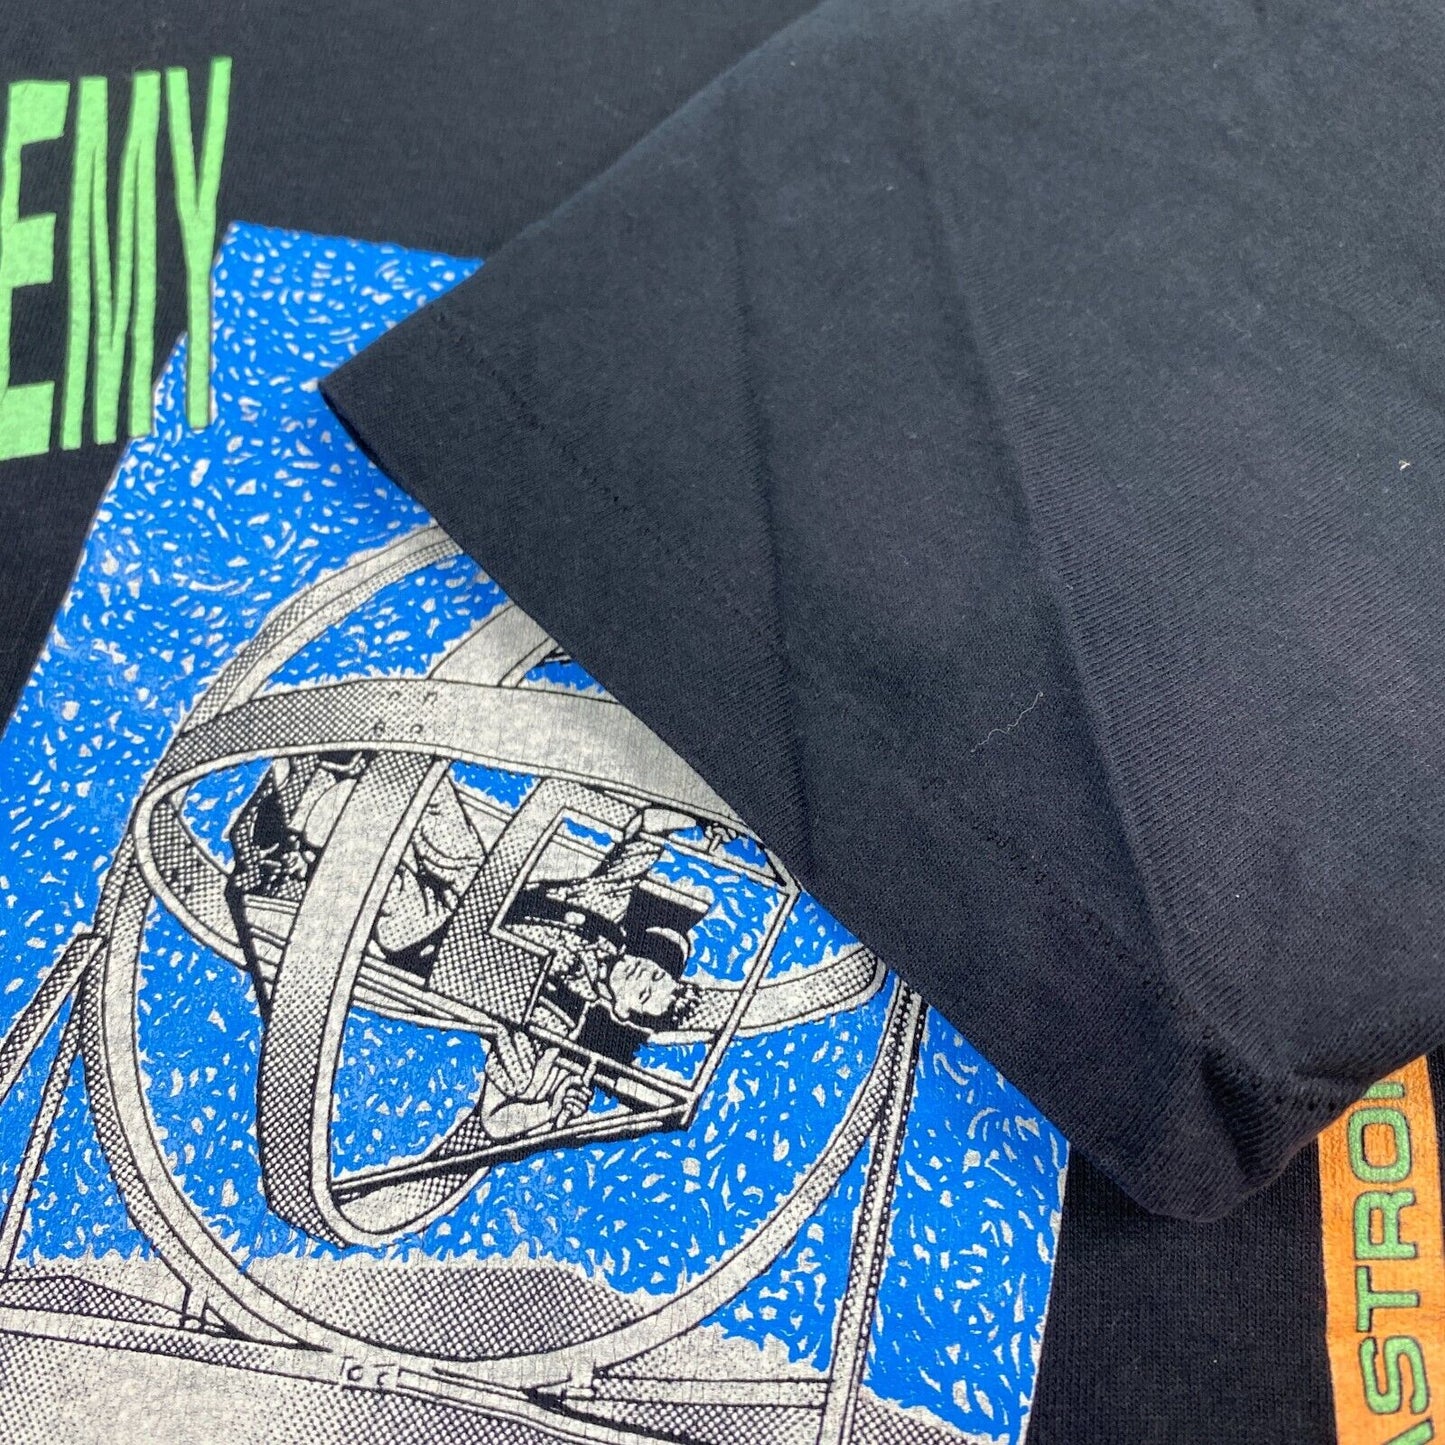 VINTAGE 90s Space Academy Space Mania Graphic Black T-Shirt sz M Mens